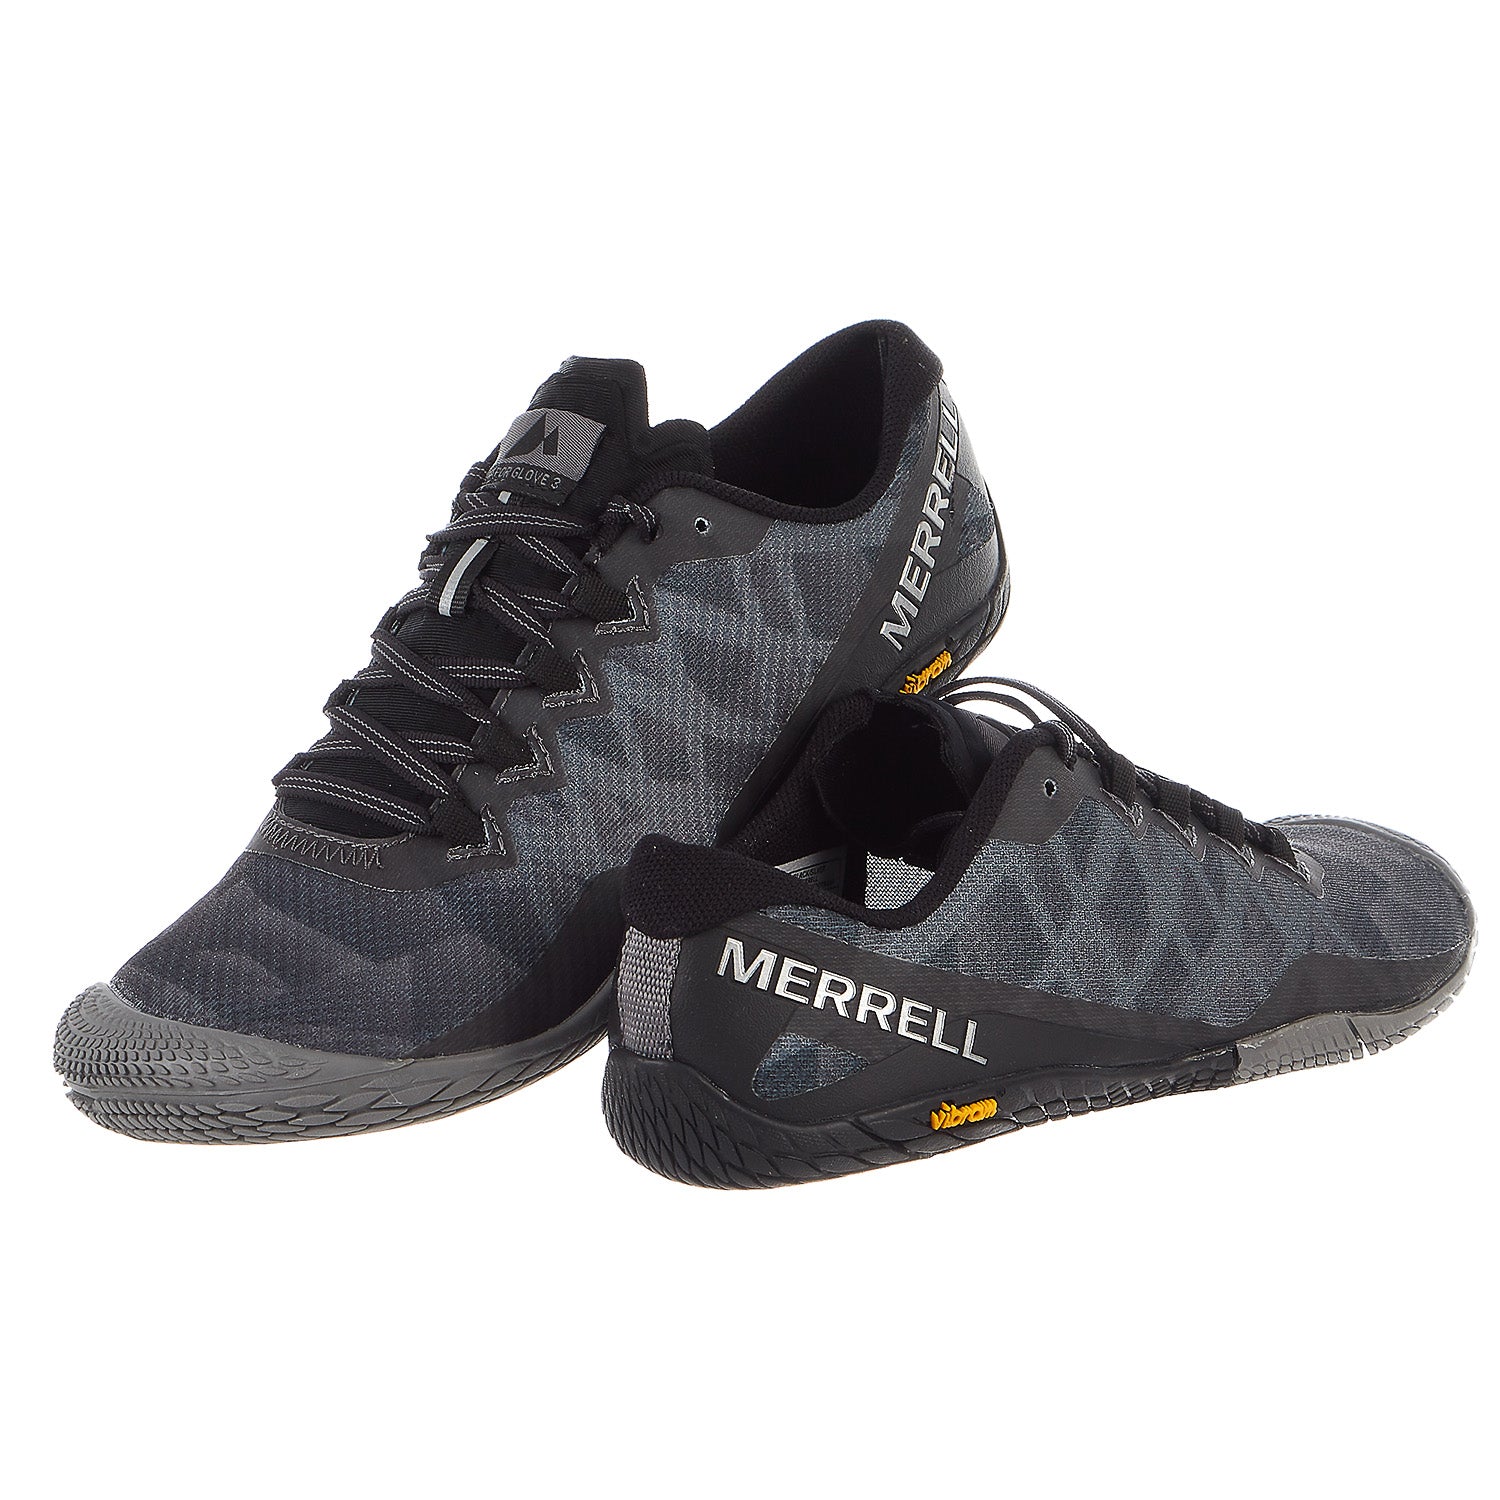 Merrell Glove Trail Runner - Women's Shoplifestyle